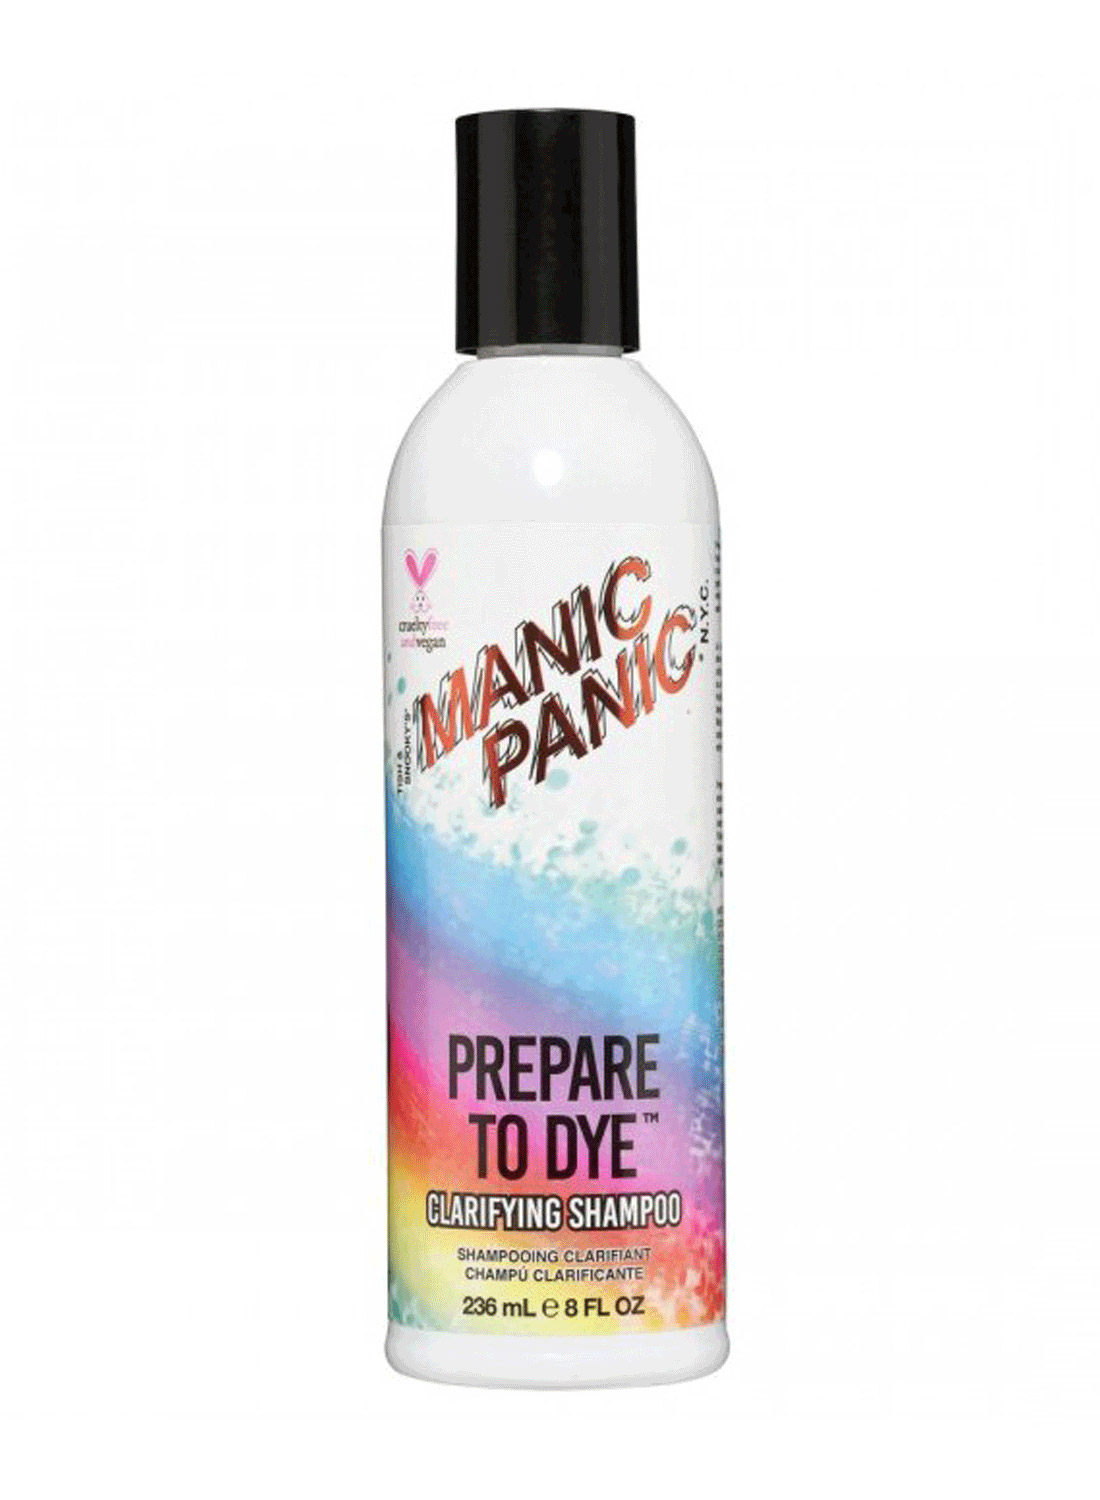 Manic Panic's Prepare To Dye Shampoo